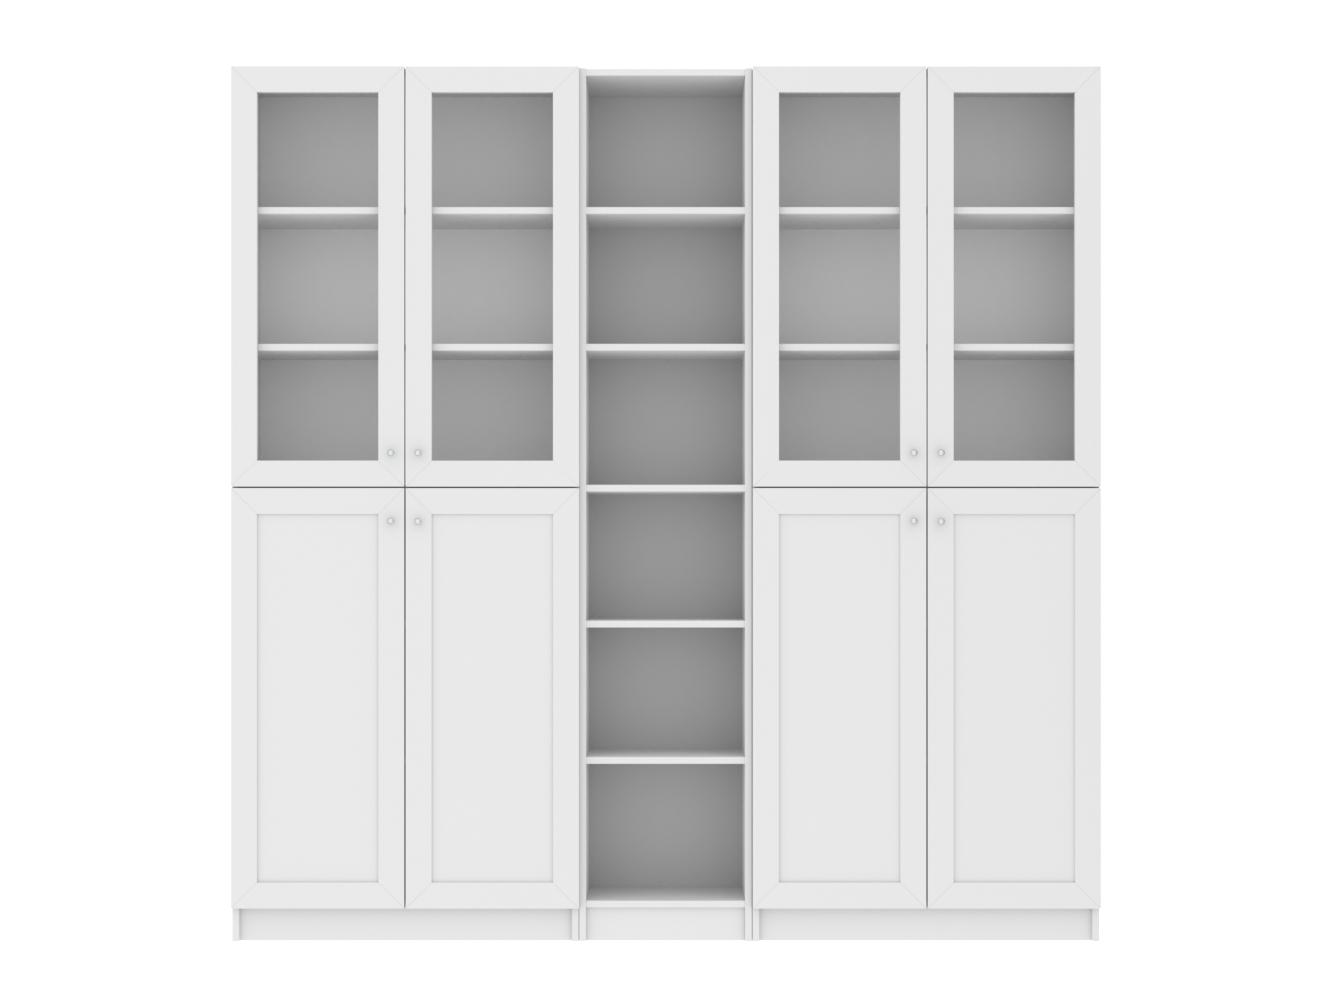 Книжный шкаф Билли 397 white ИКЕА (IKEA) изображение товара